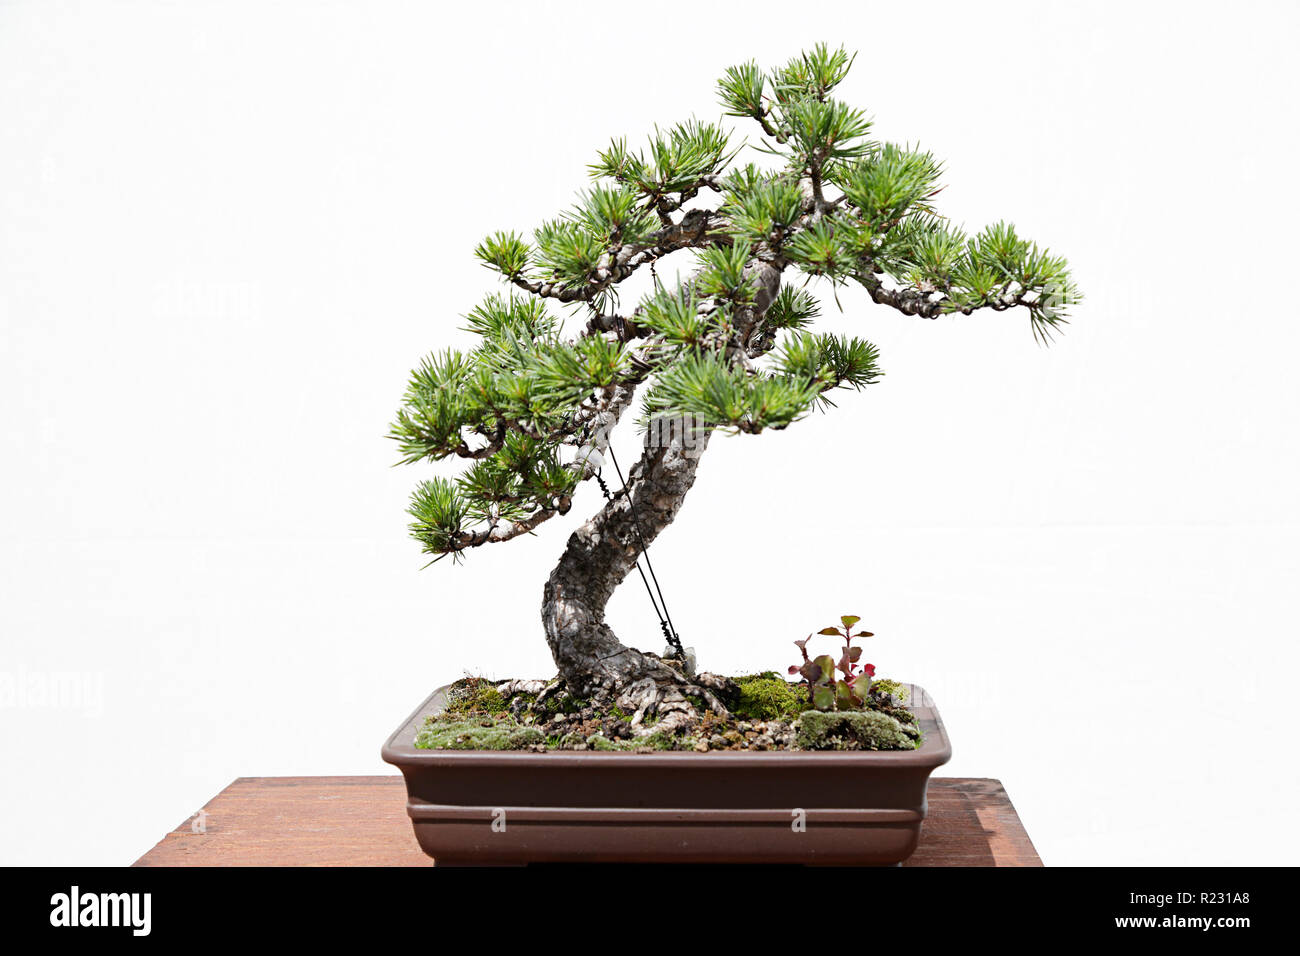 Scots pine (pinus sylvestris) bonsai on a wooden table and white background Stock Photo